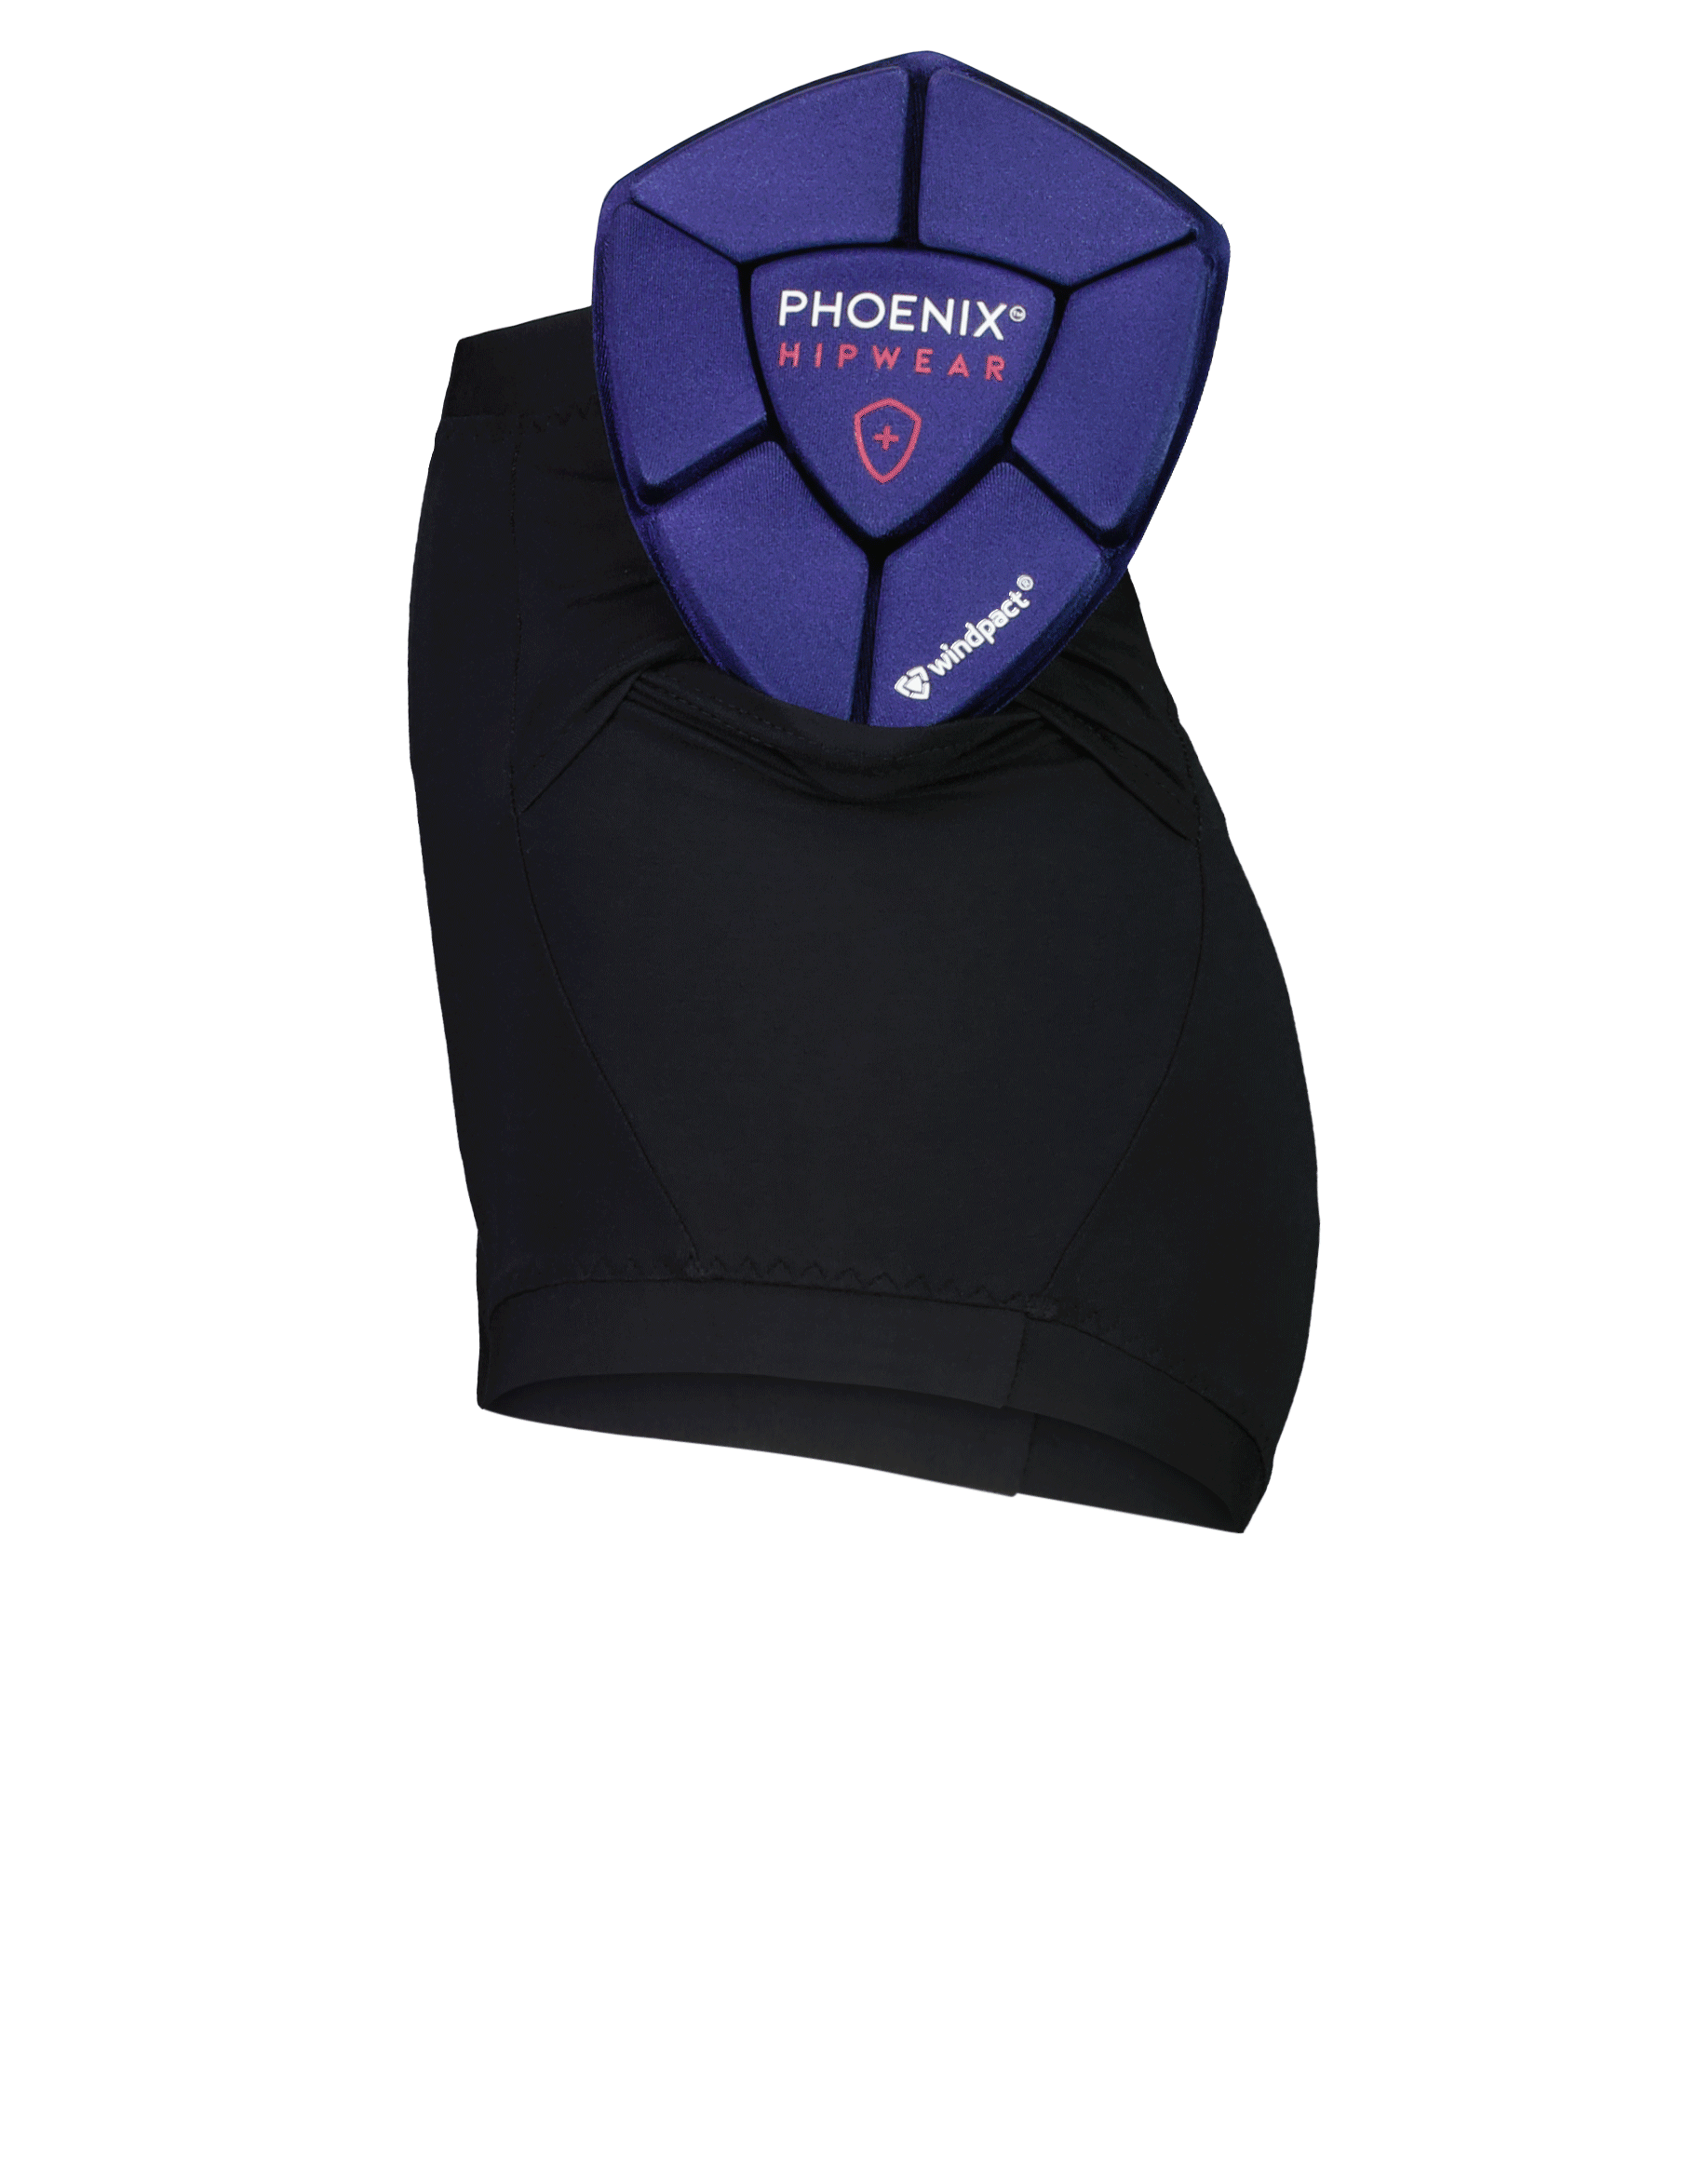 Phoenix Hipwear Unisex Shields - Set of 2 image 1